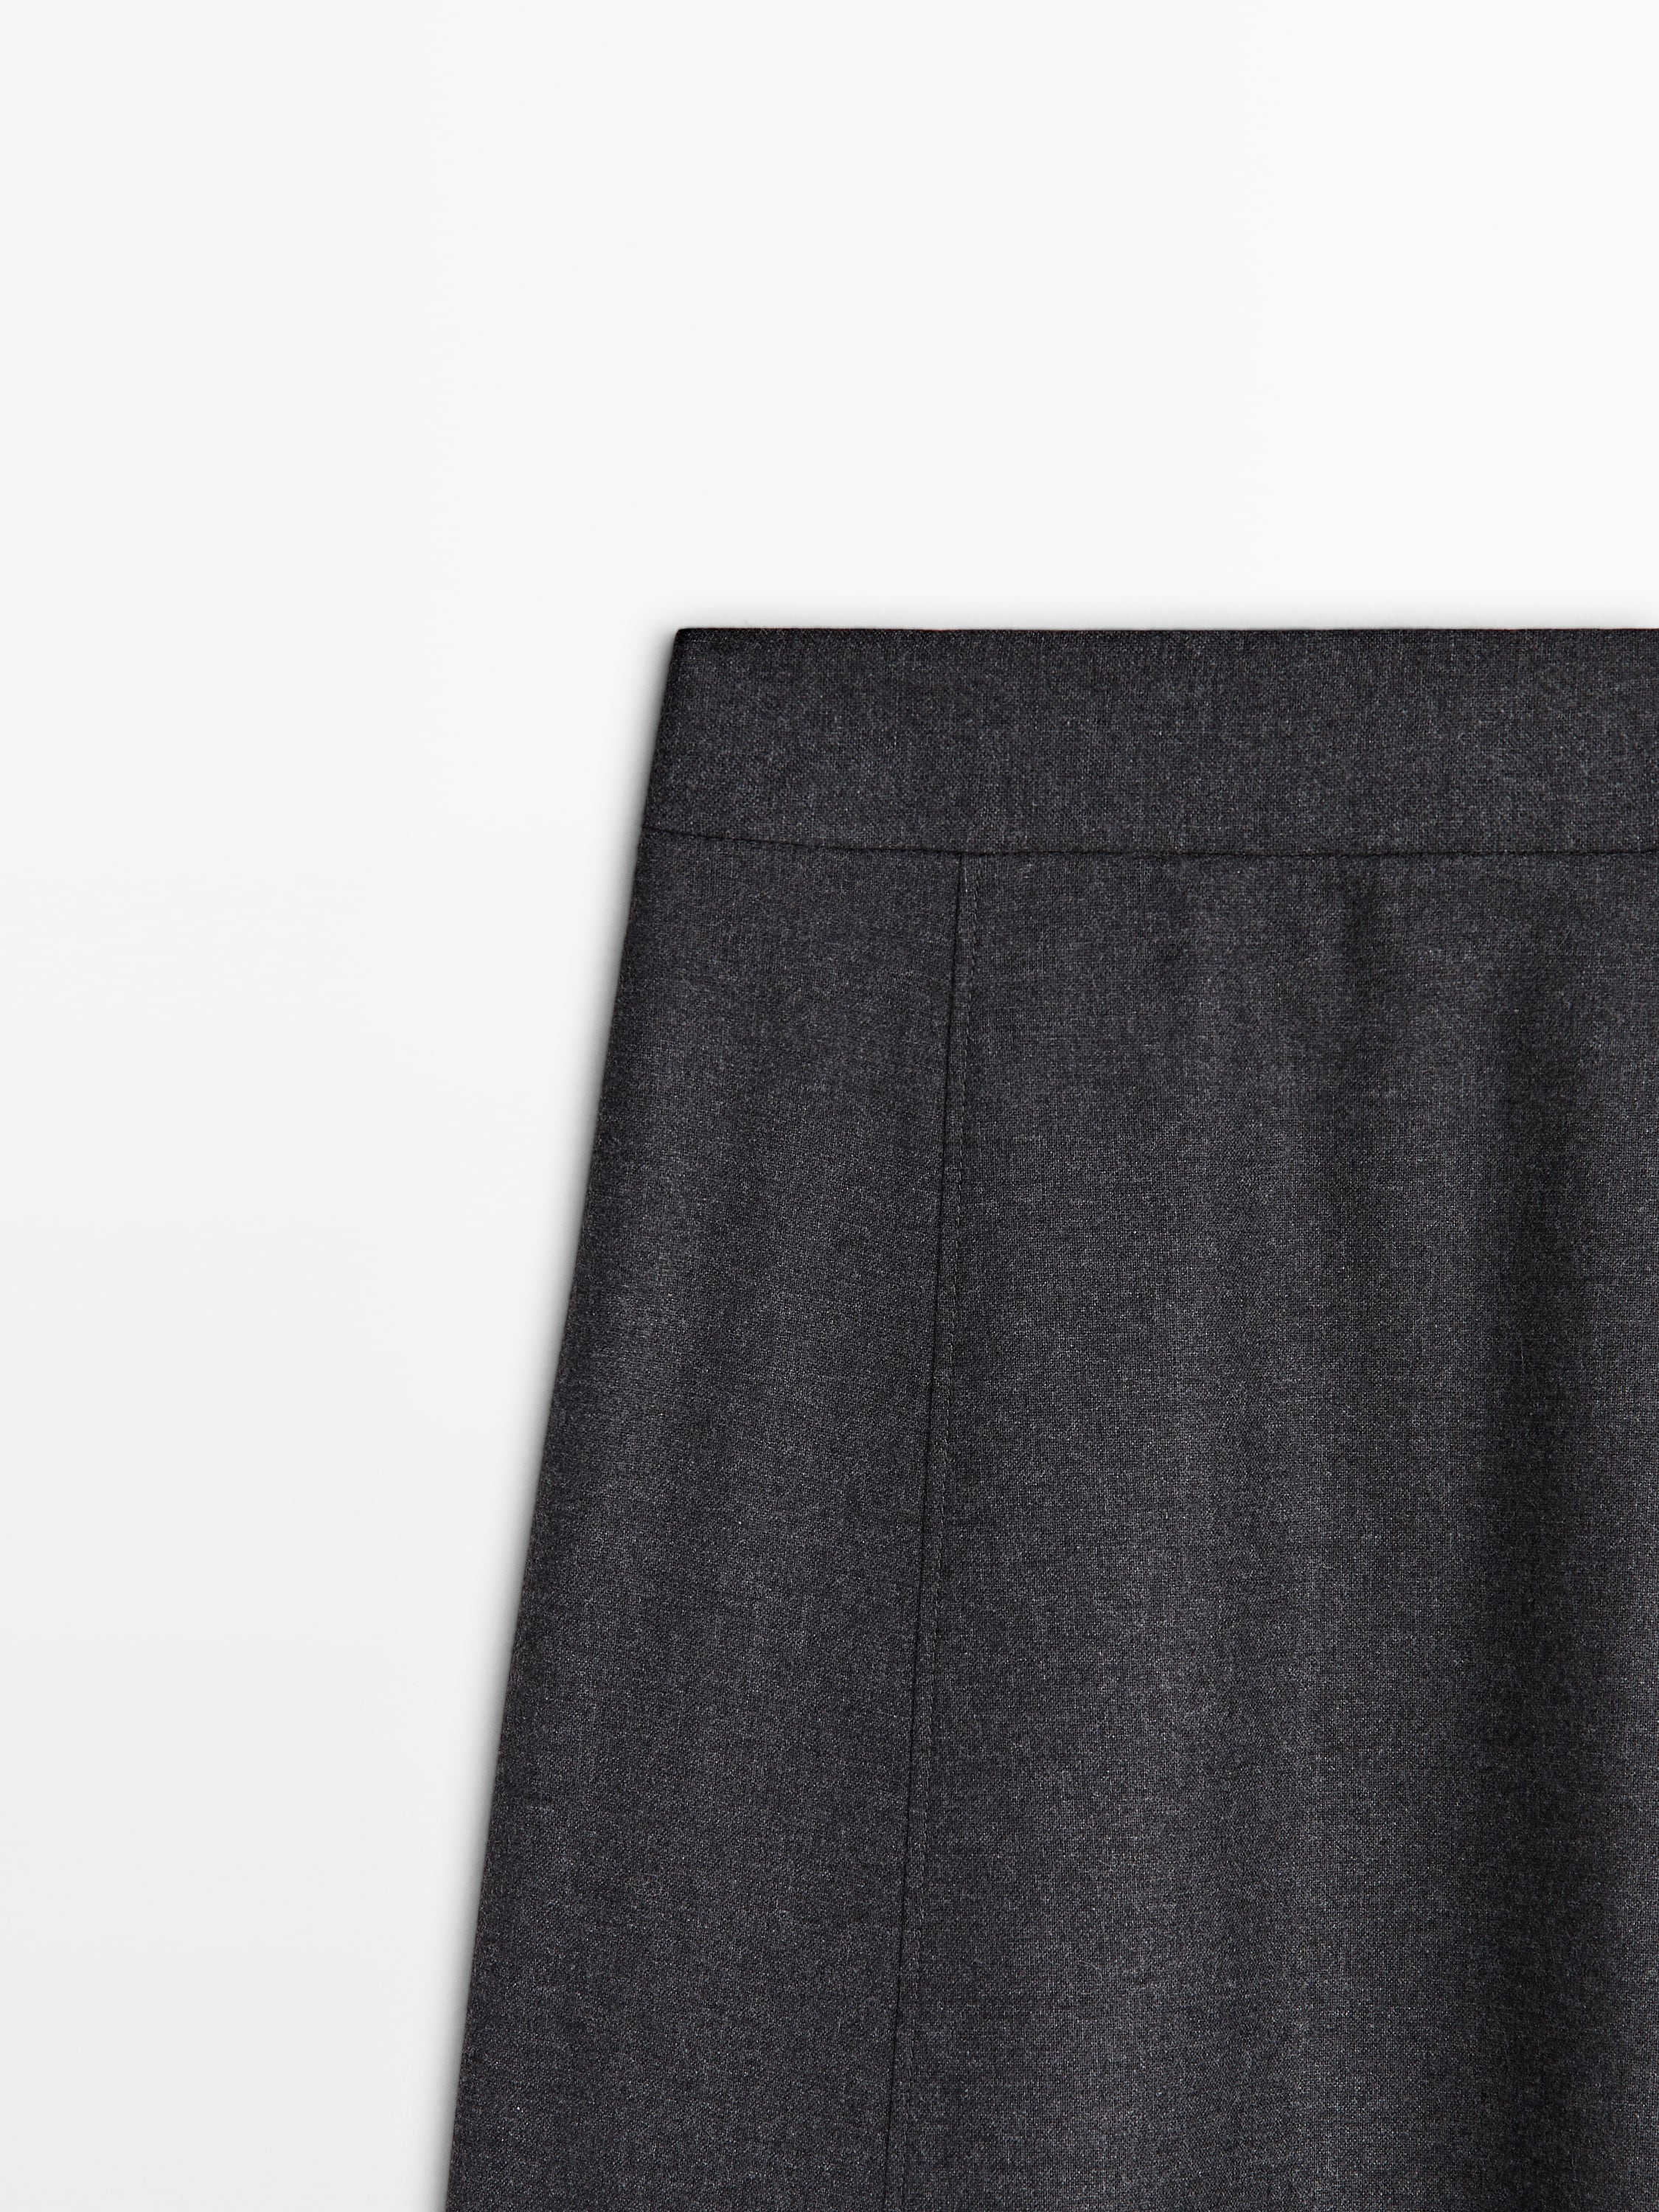 Grey wool blend midi skirt